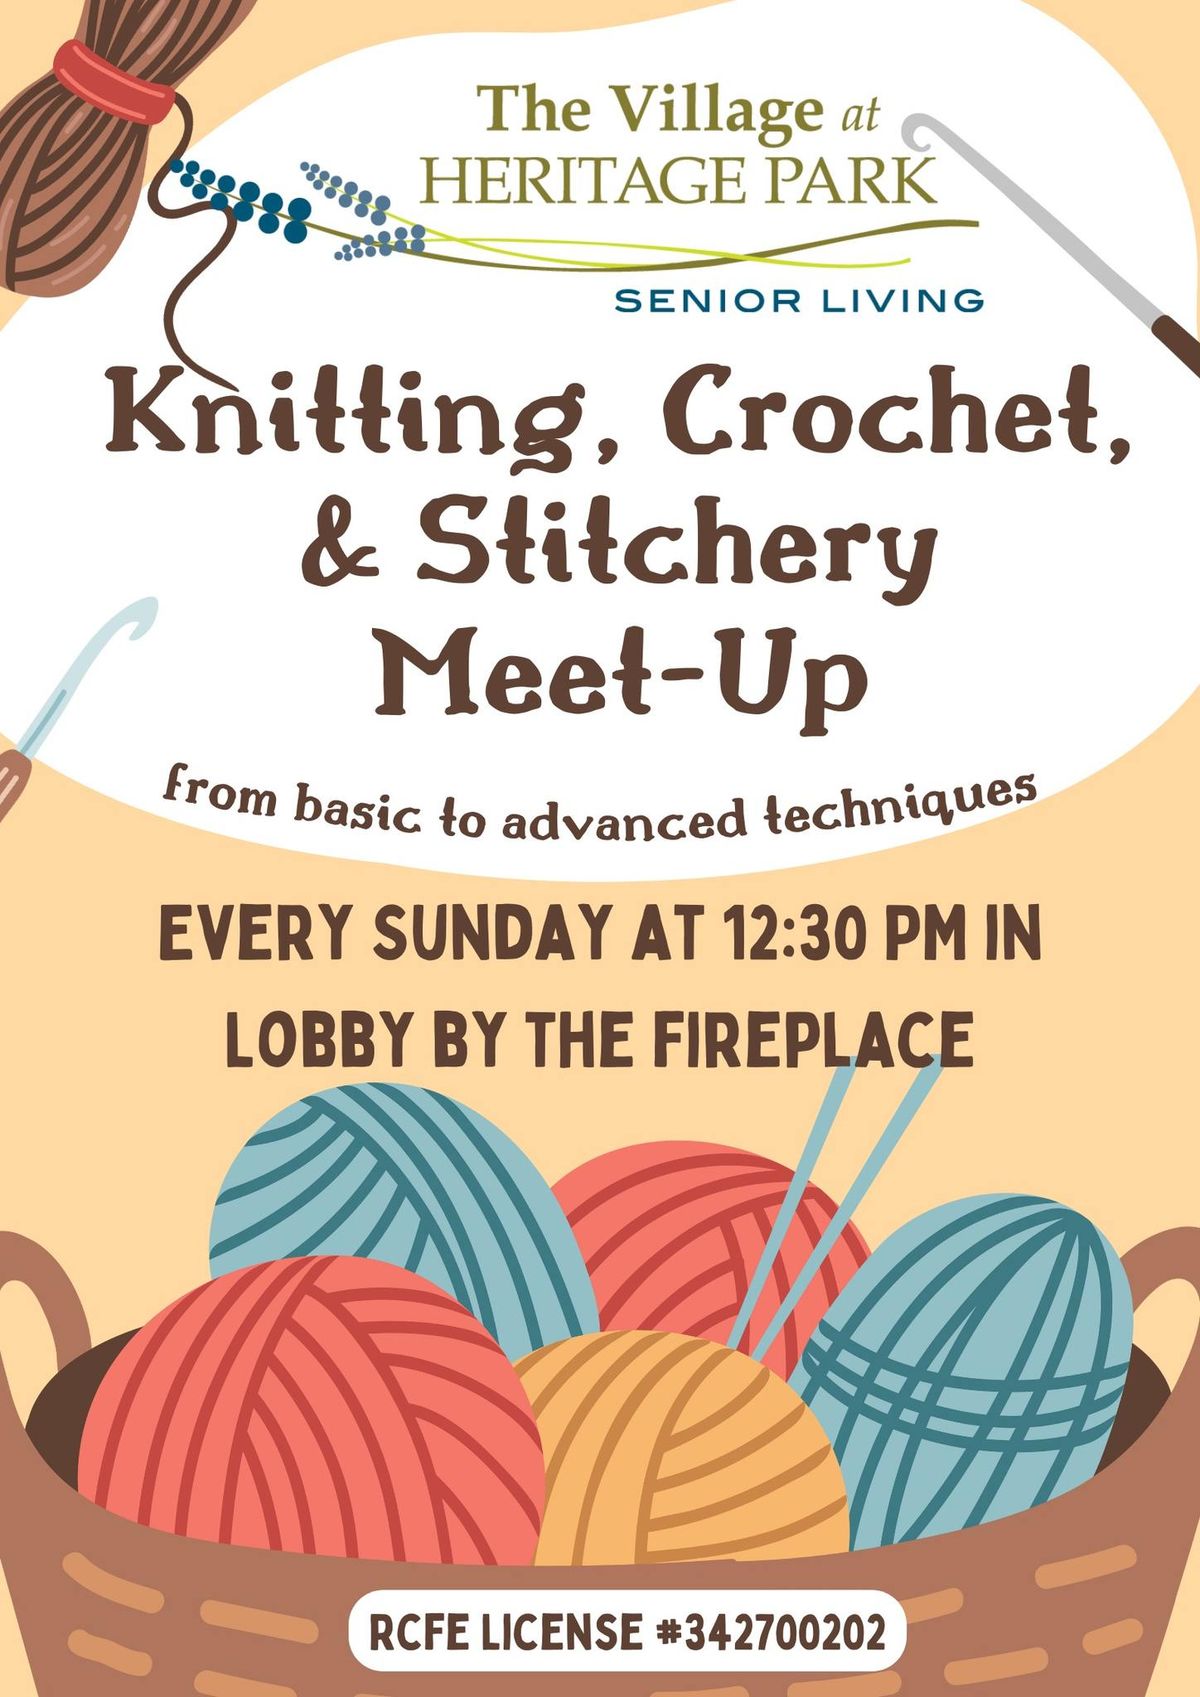 Knitting, Crochet, & Stitchery Meet-Up